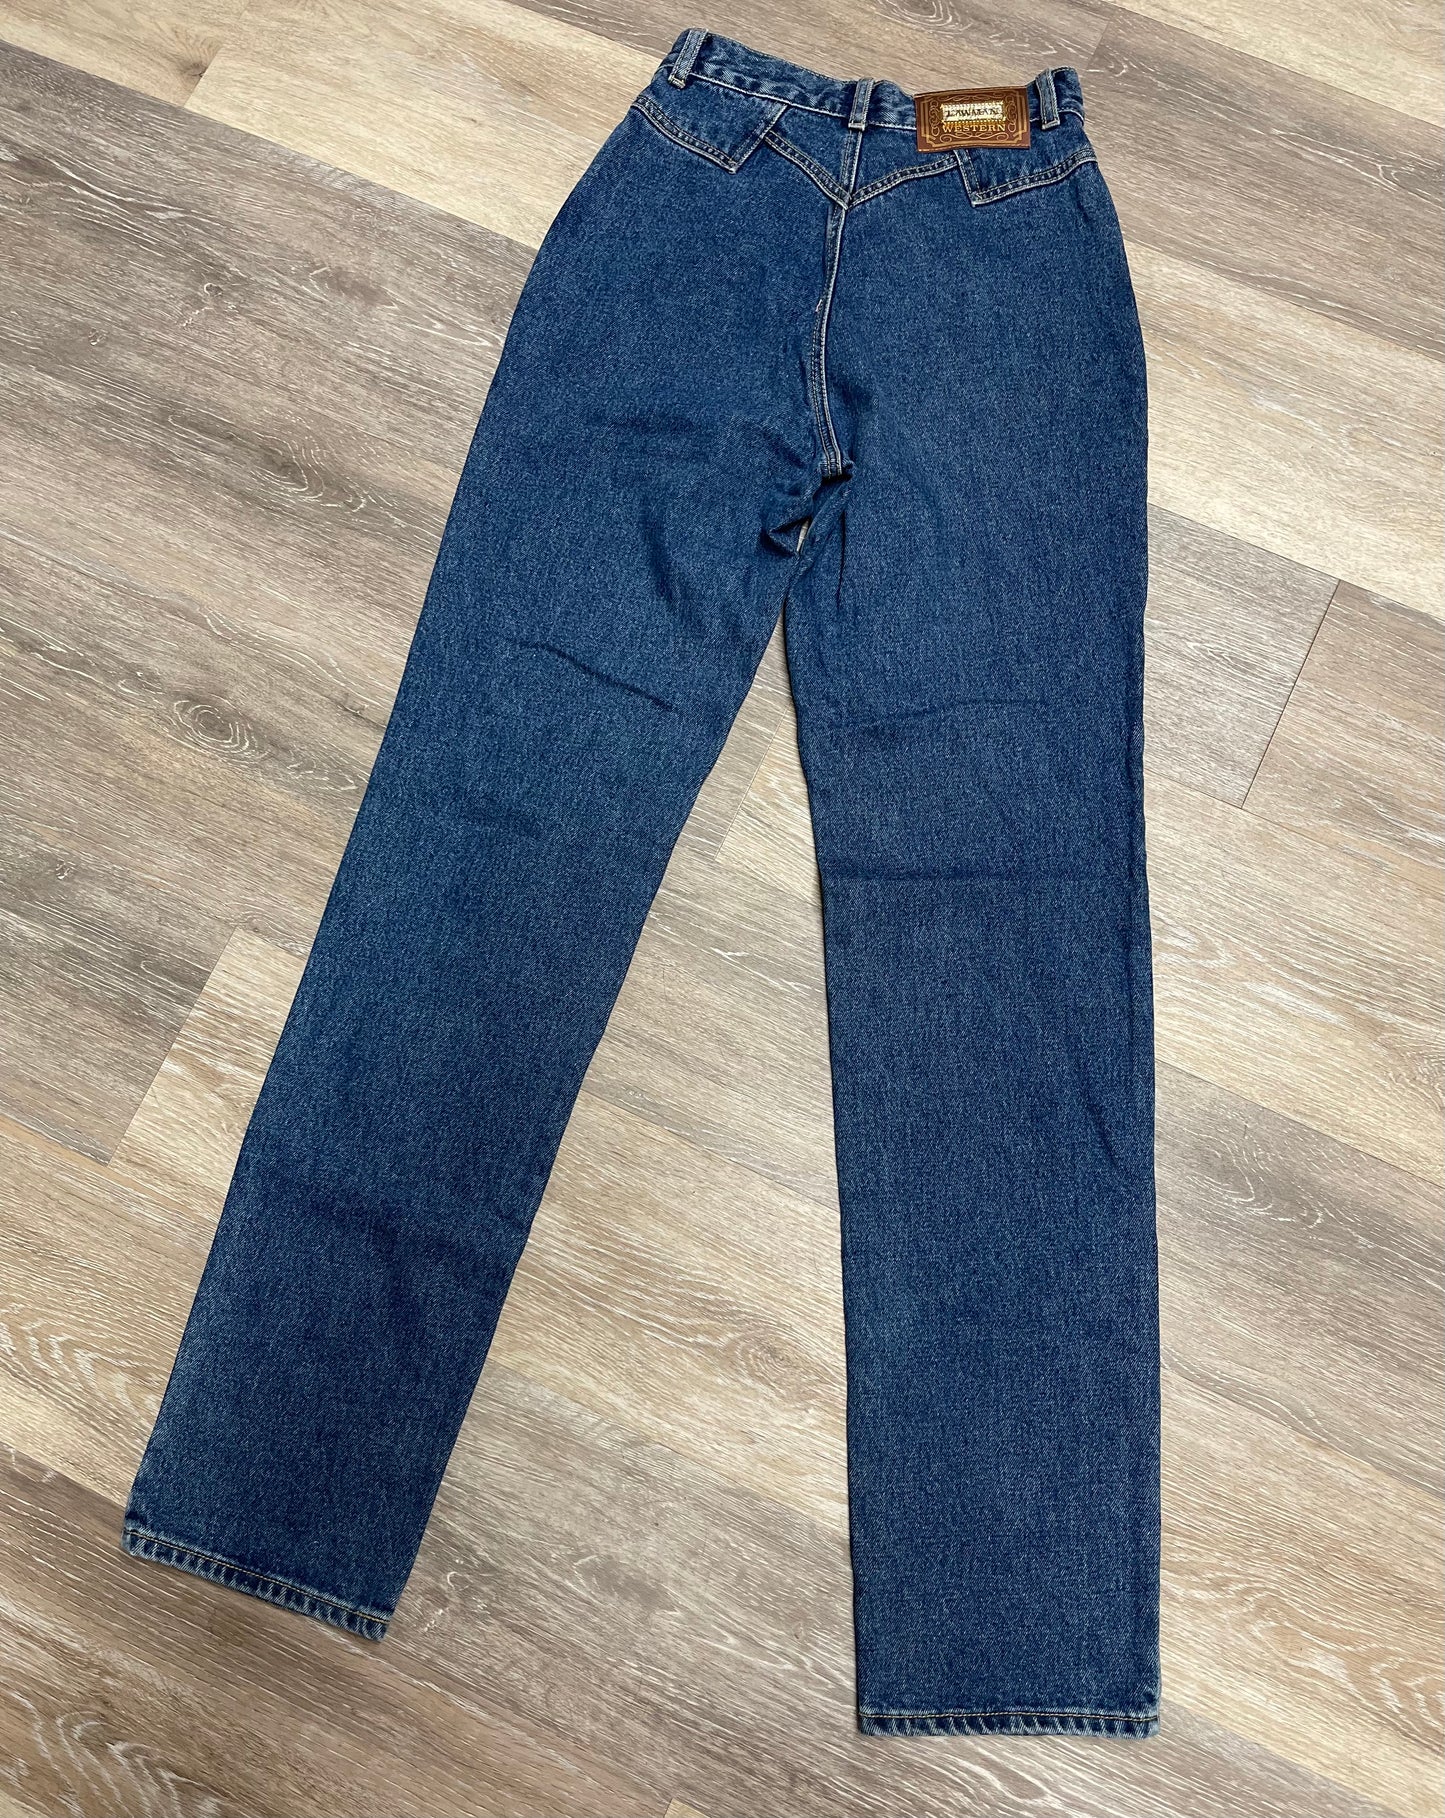 Size 5 Vintage Lawman Bareback Denim Jeans